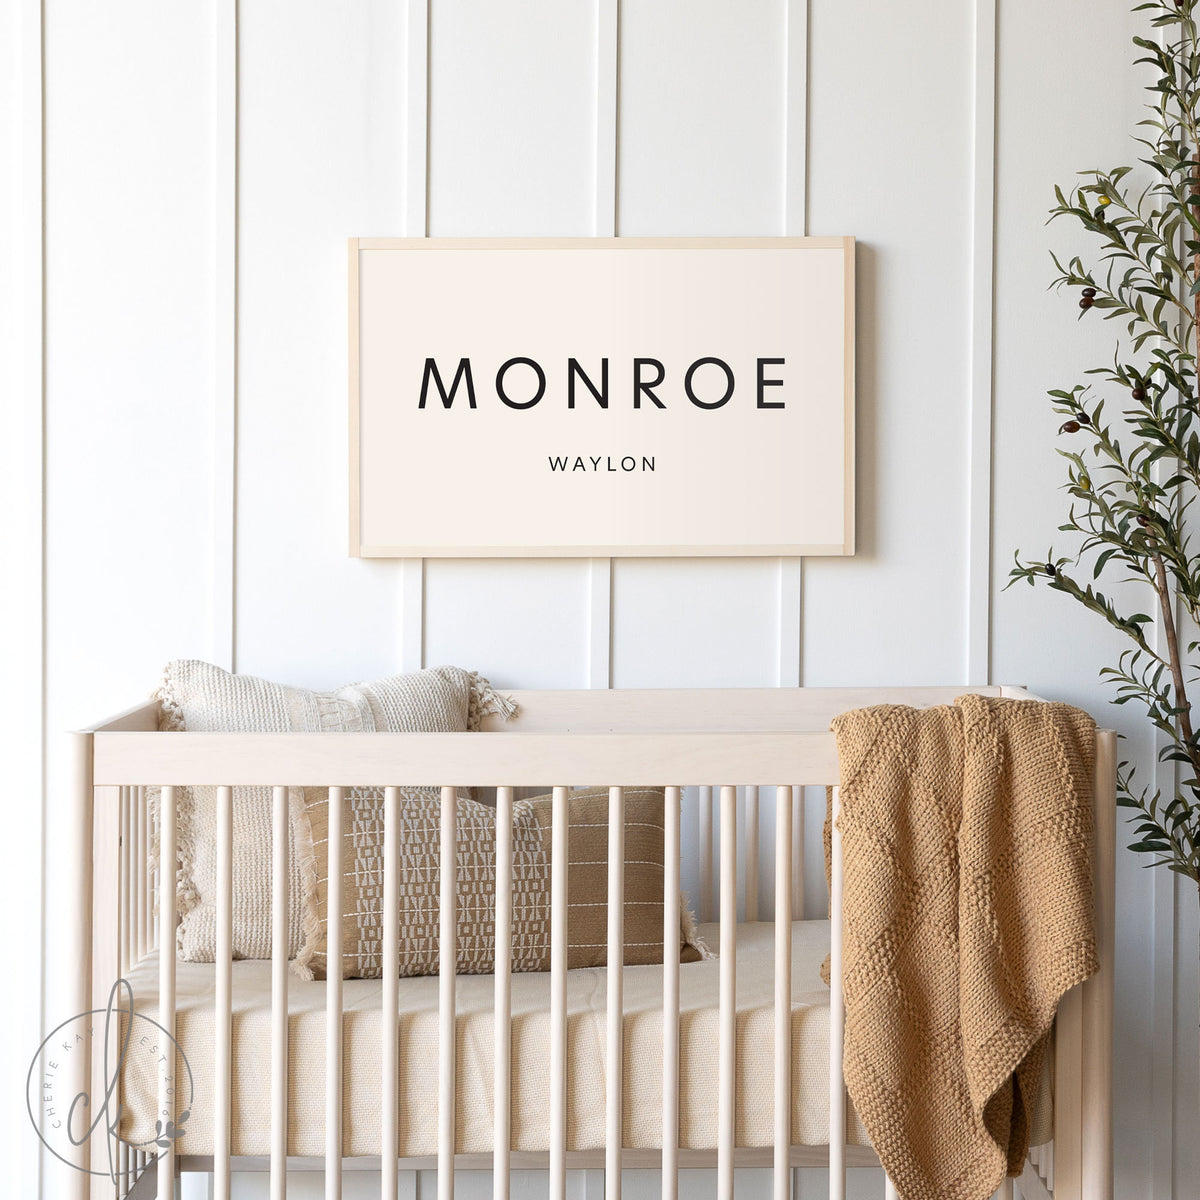 Personalized Name Sign | Wood Framed Sign | Nursery Wall Decor | Kids Room Wall Art | Customized Nursery Decor | Monroe Waylon